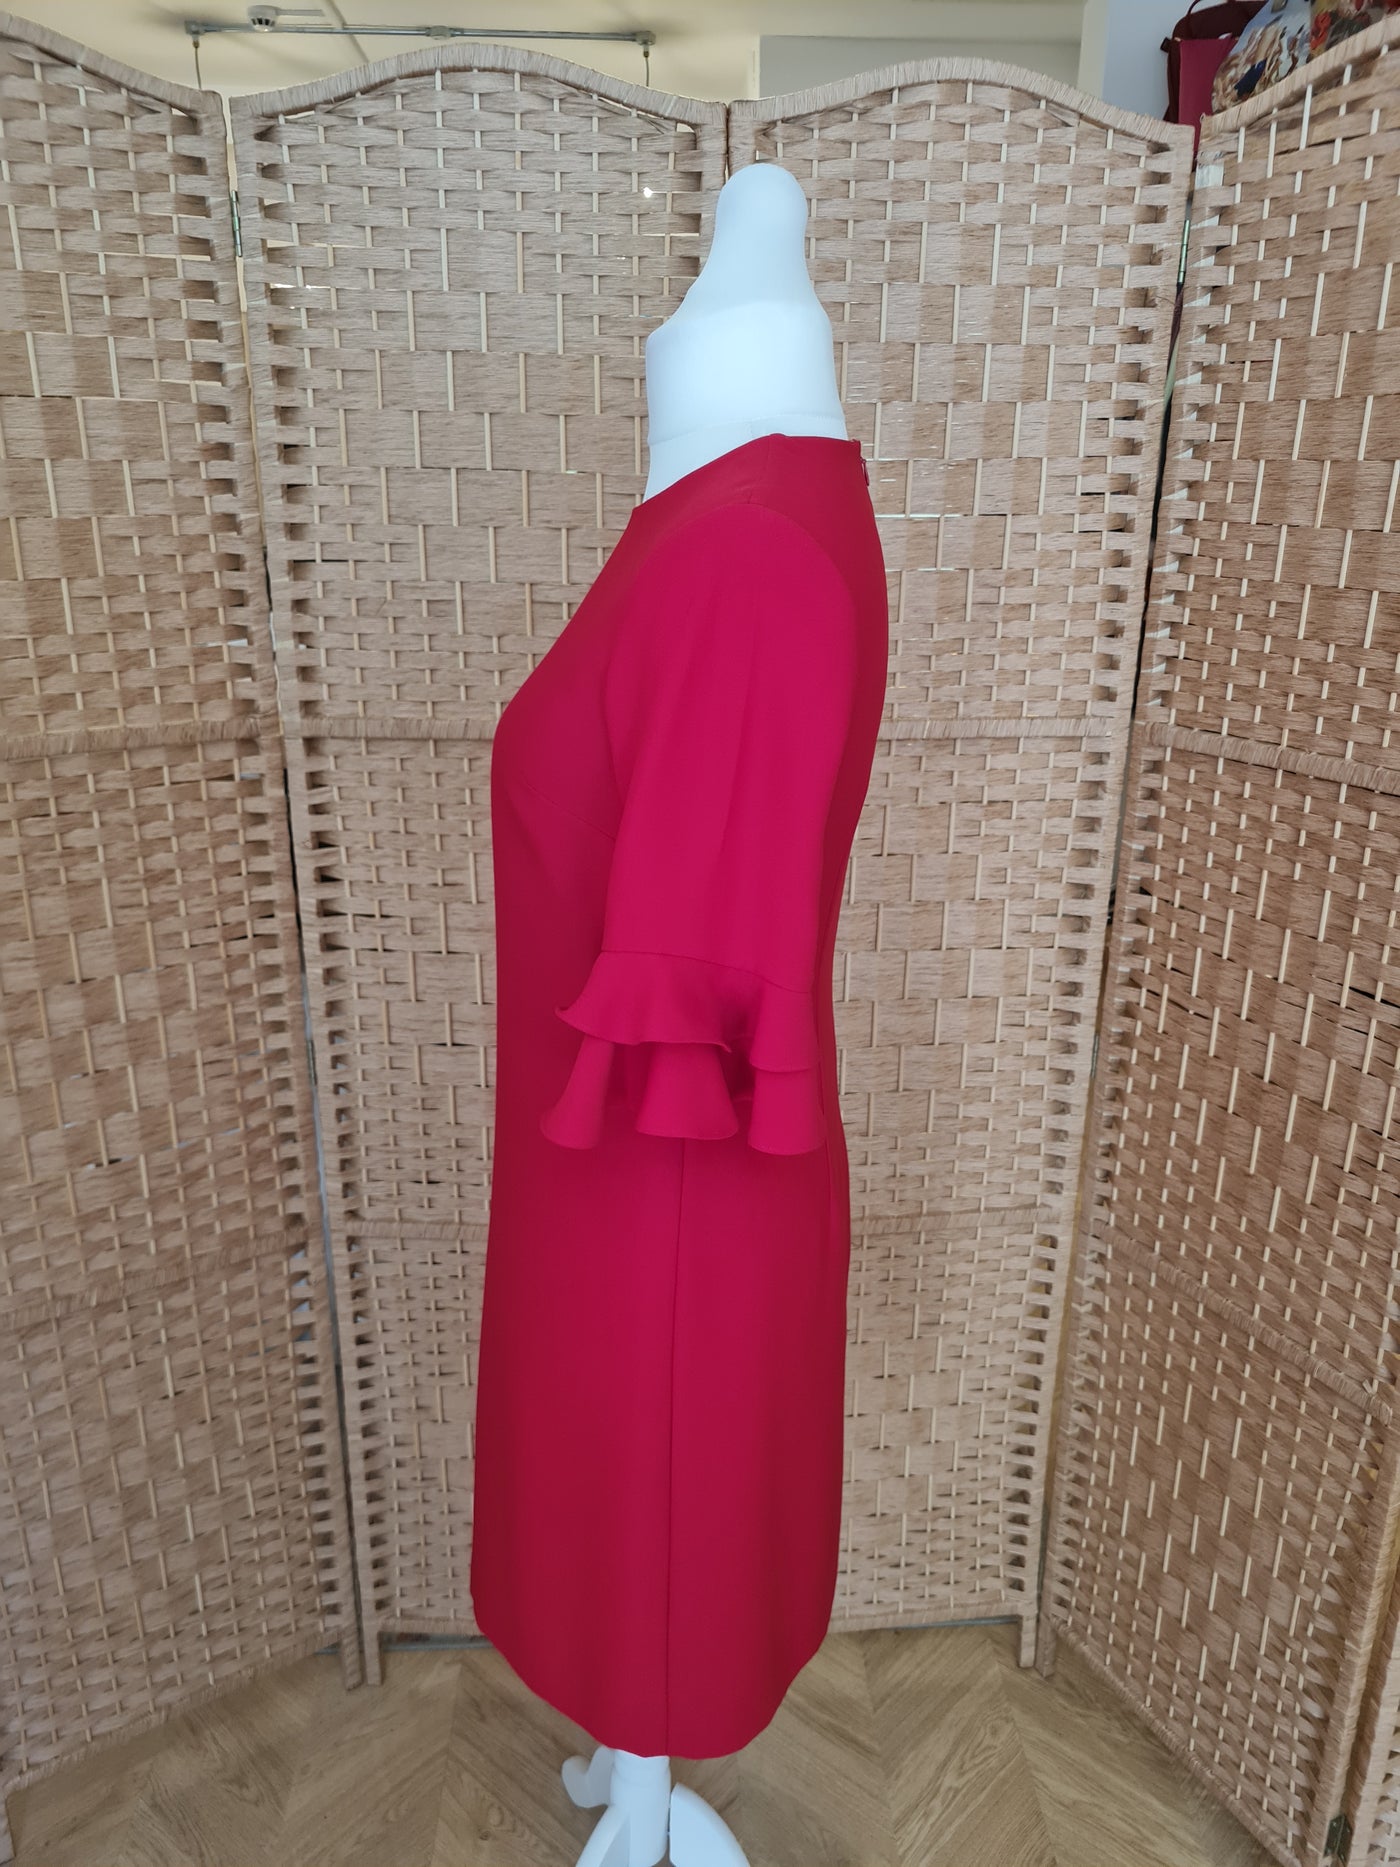 Hobbs red Frill Sleeve Dress 10